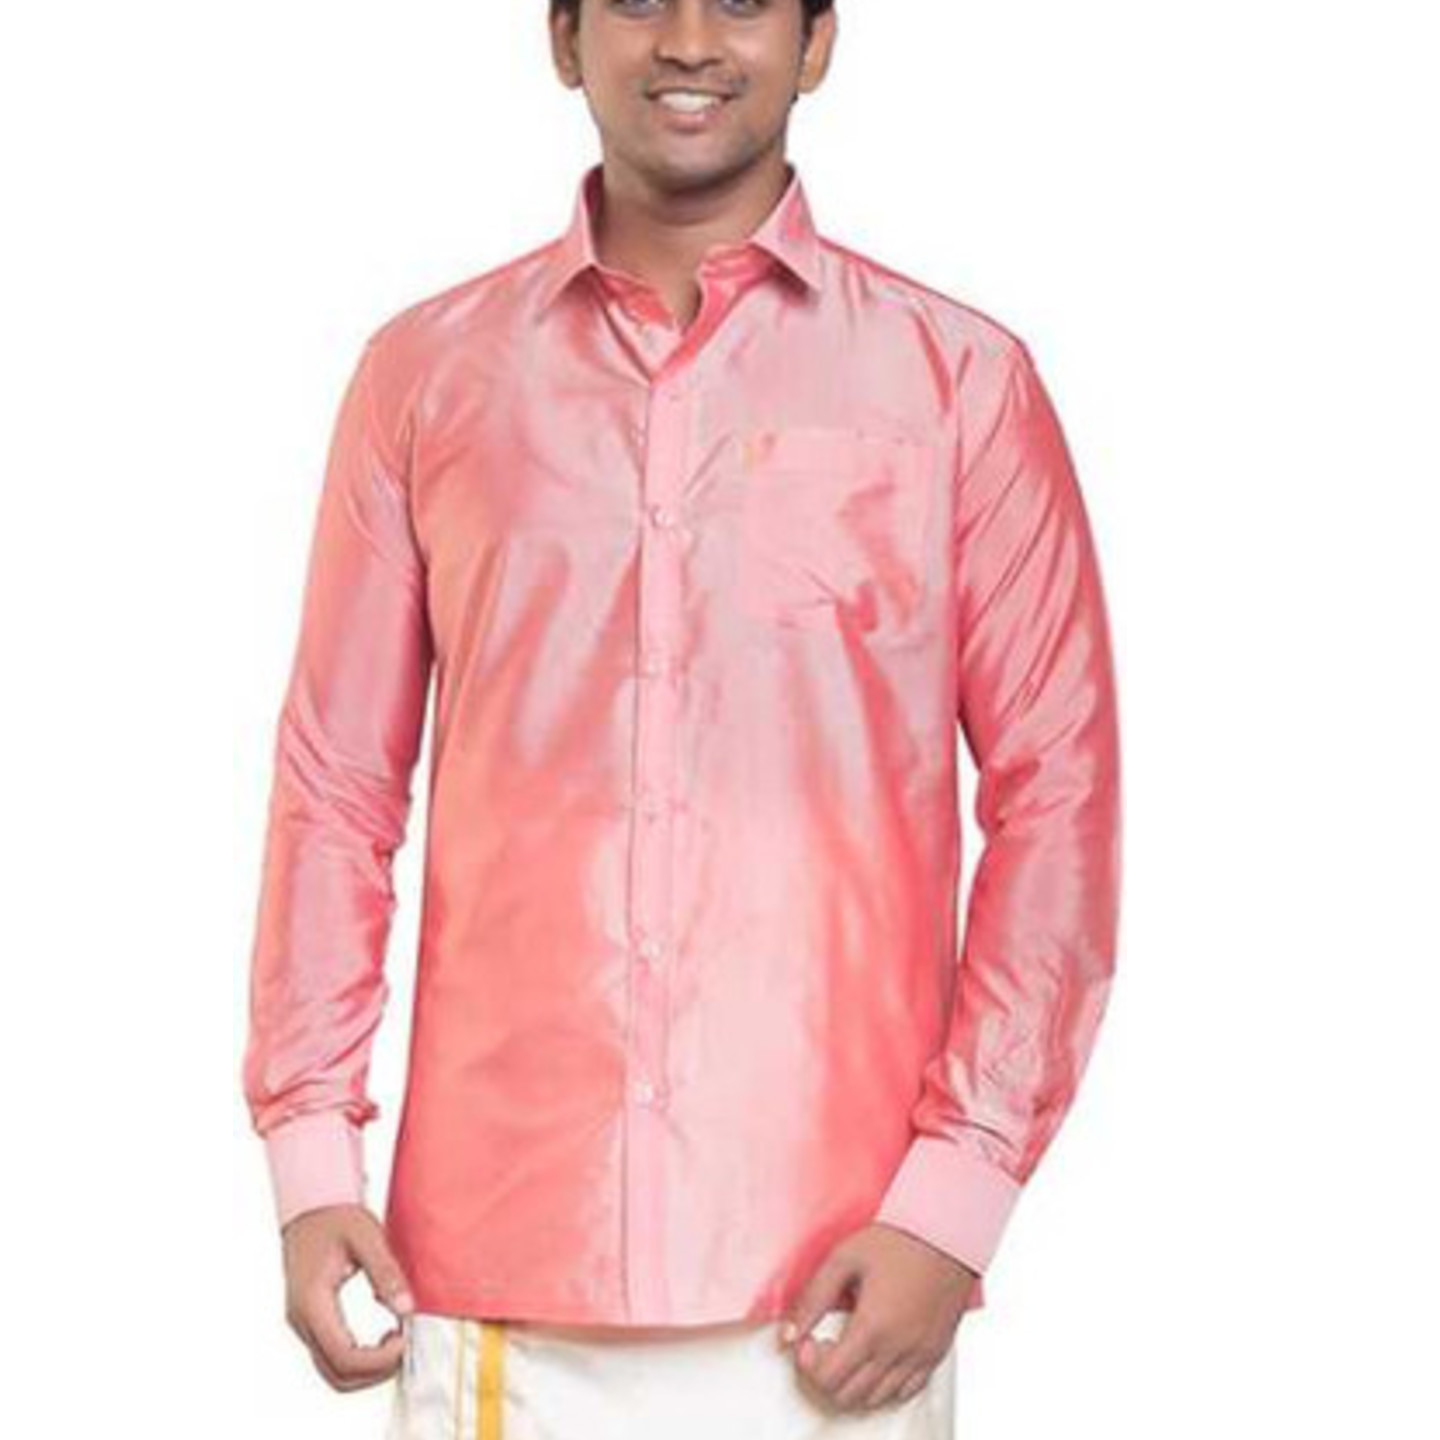 Mettalic Baby Pink Dupion Silk Shirts Buy Silk Dupion Shirts Pure Silk Shirts